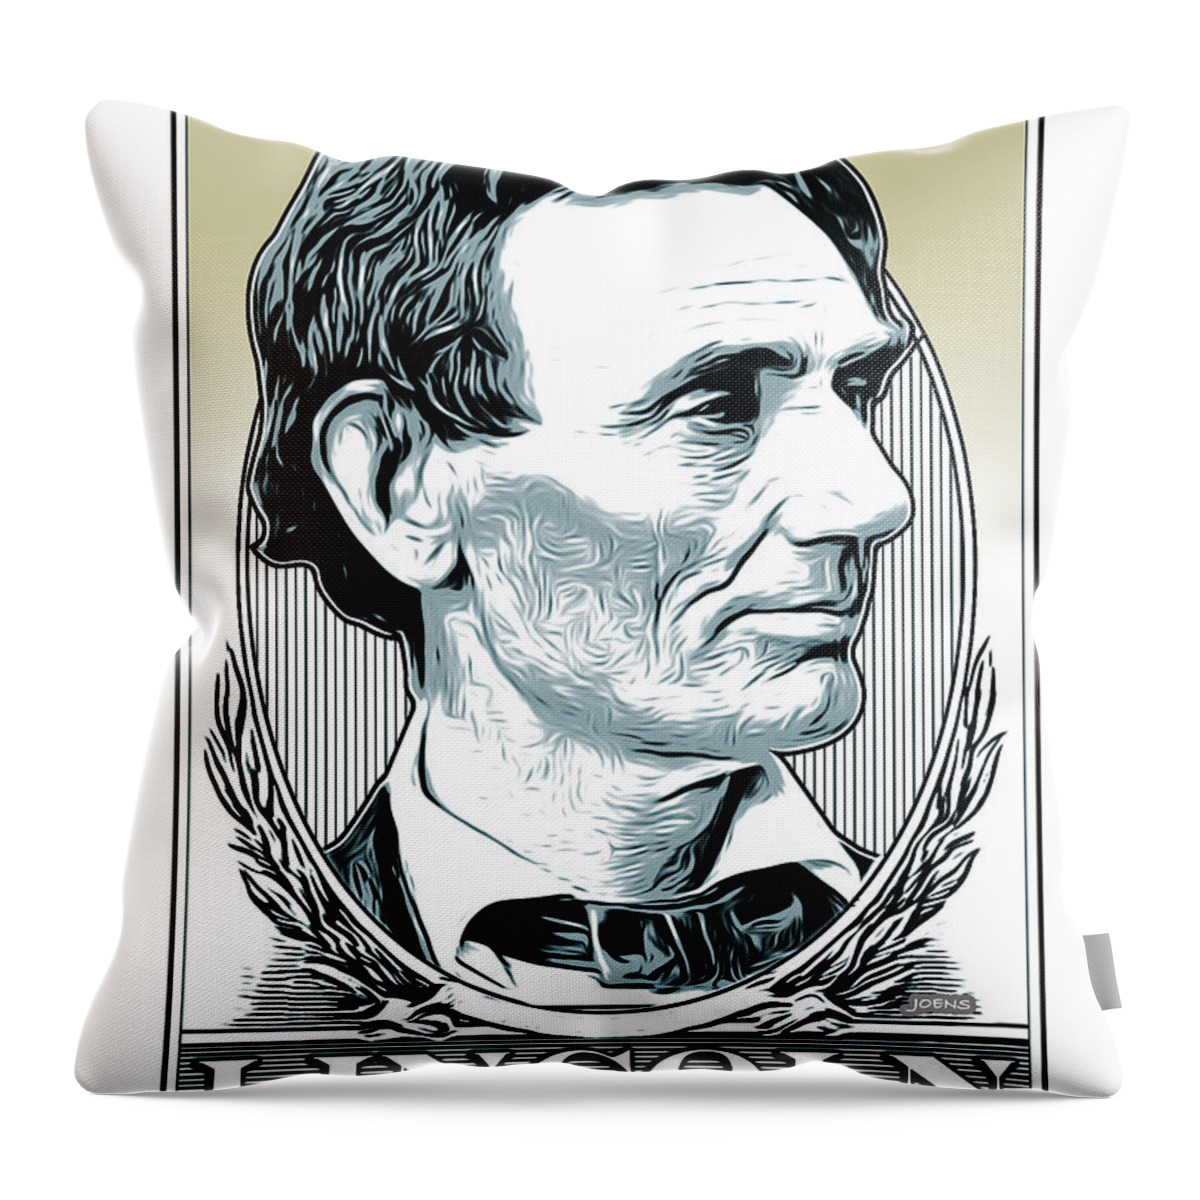 Digital Throw Pillow featuring the digital art Lincoln Poster by Greg Joens